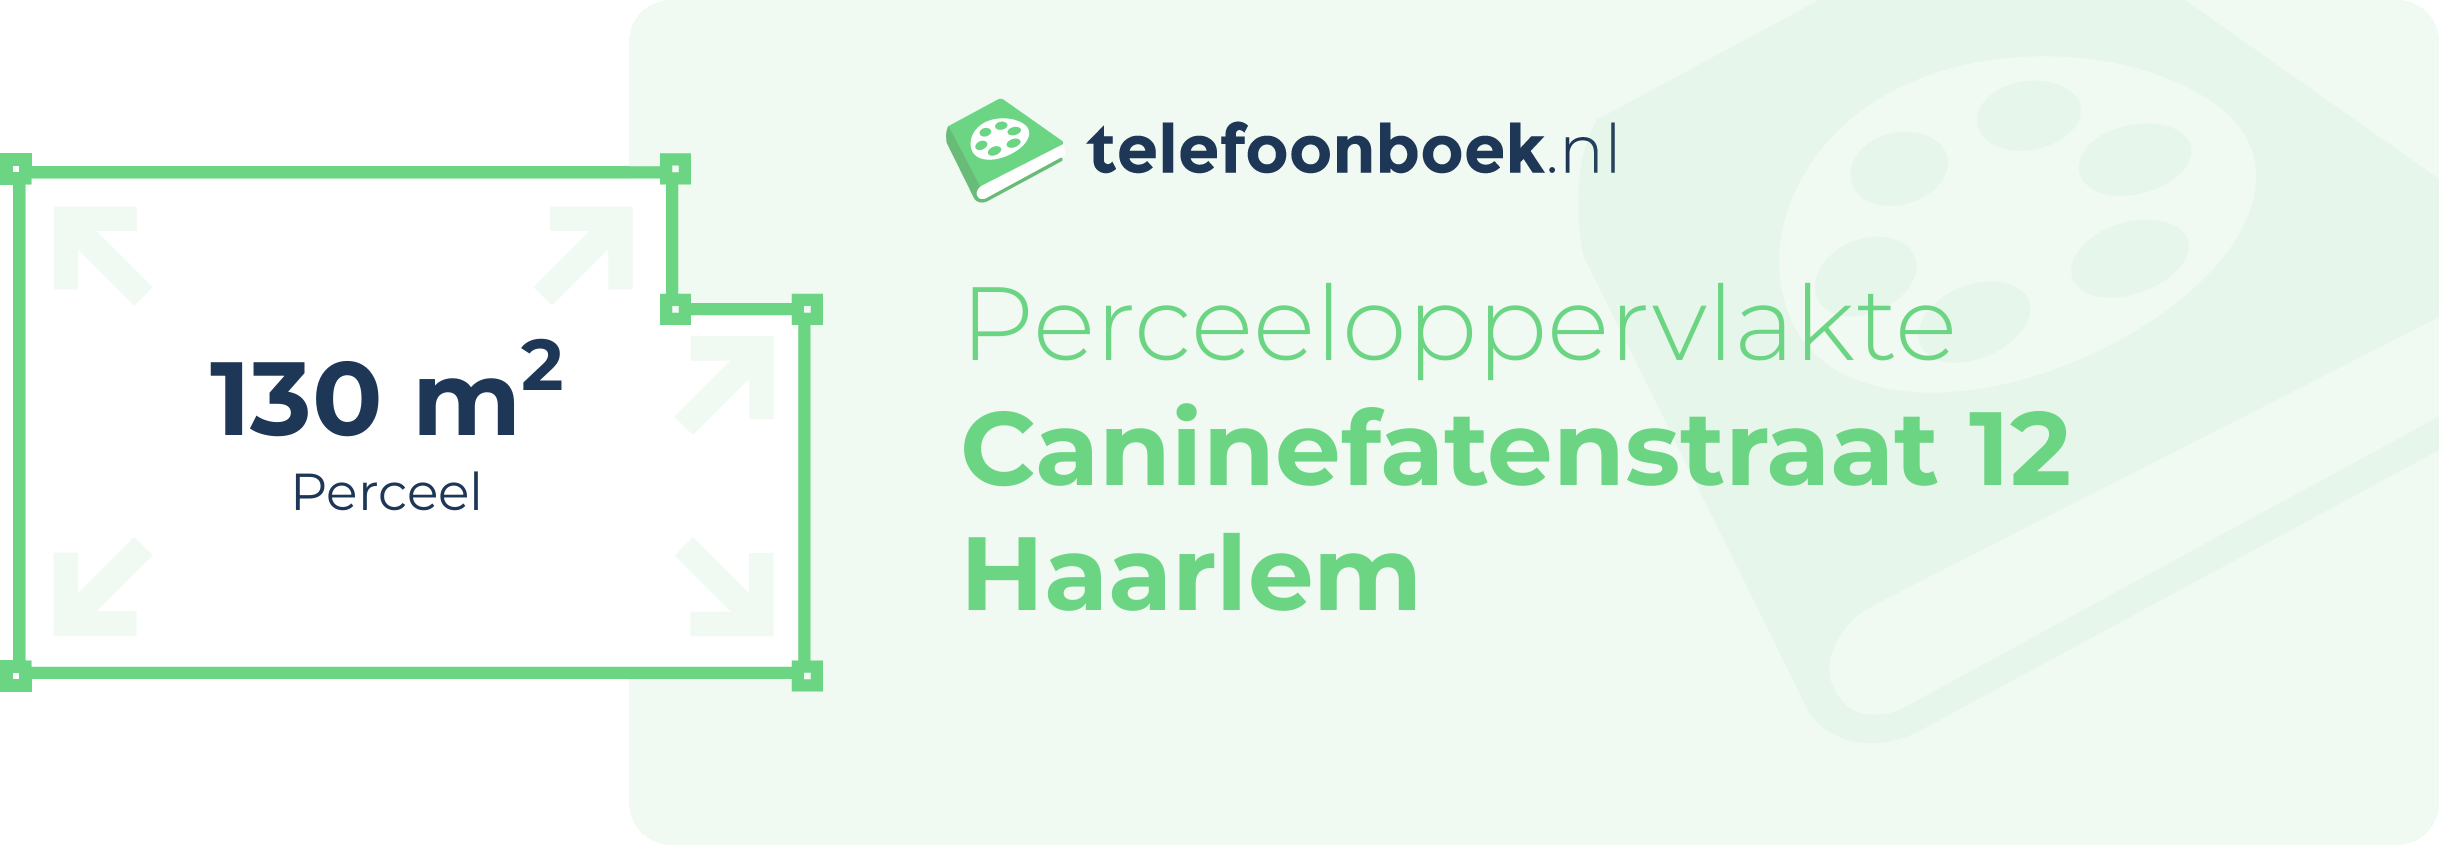 Perceeloppervlakte Caninefatenstraat 12 Haarlem